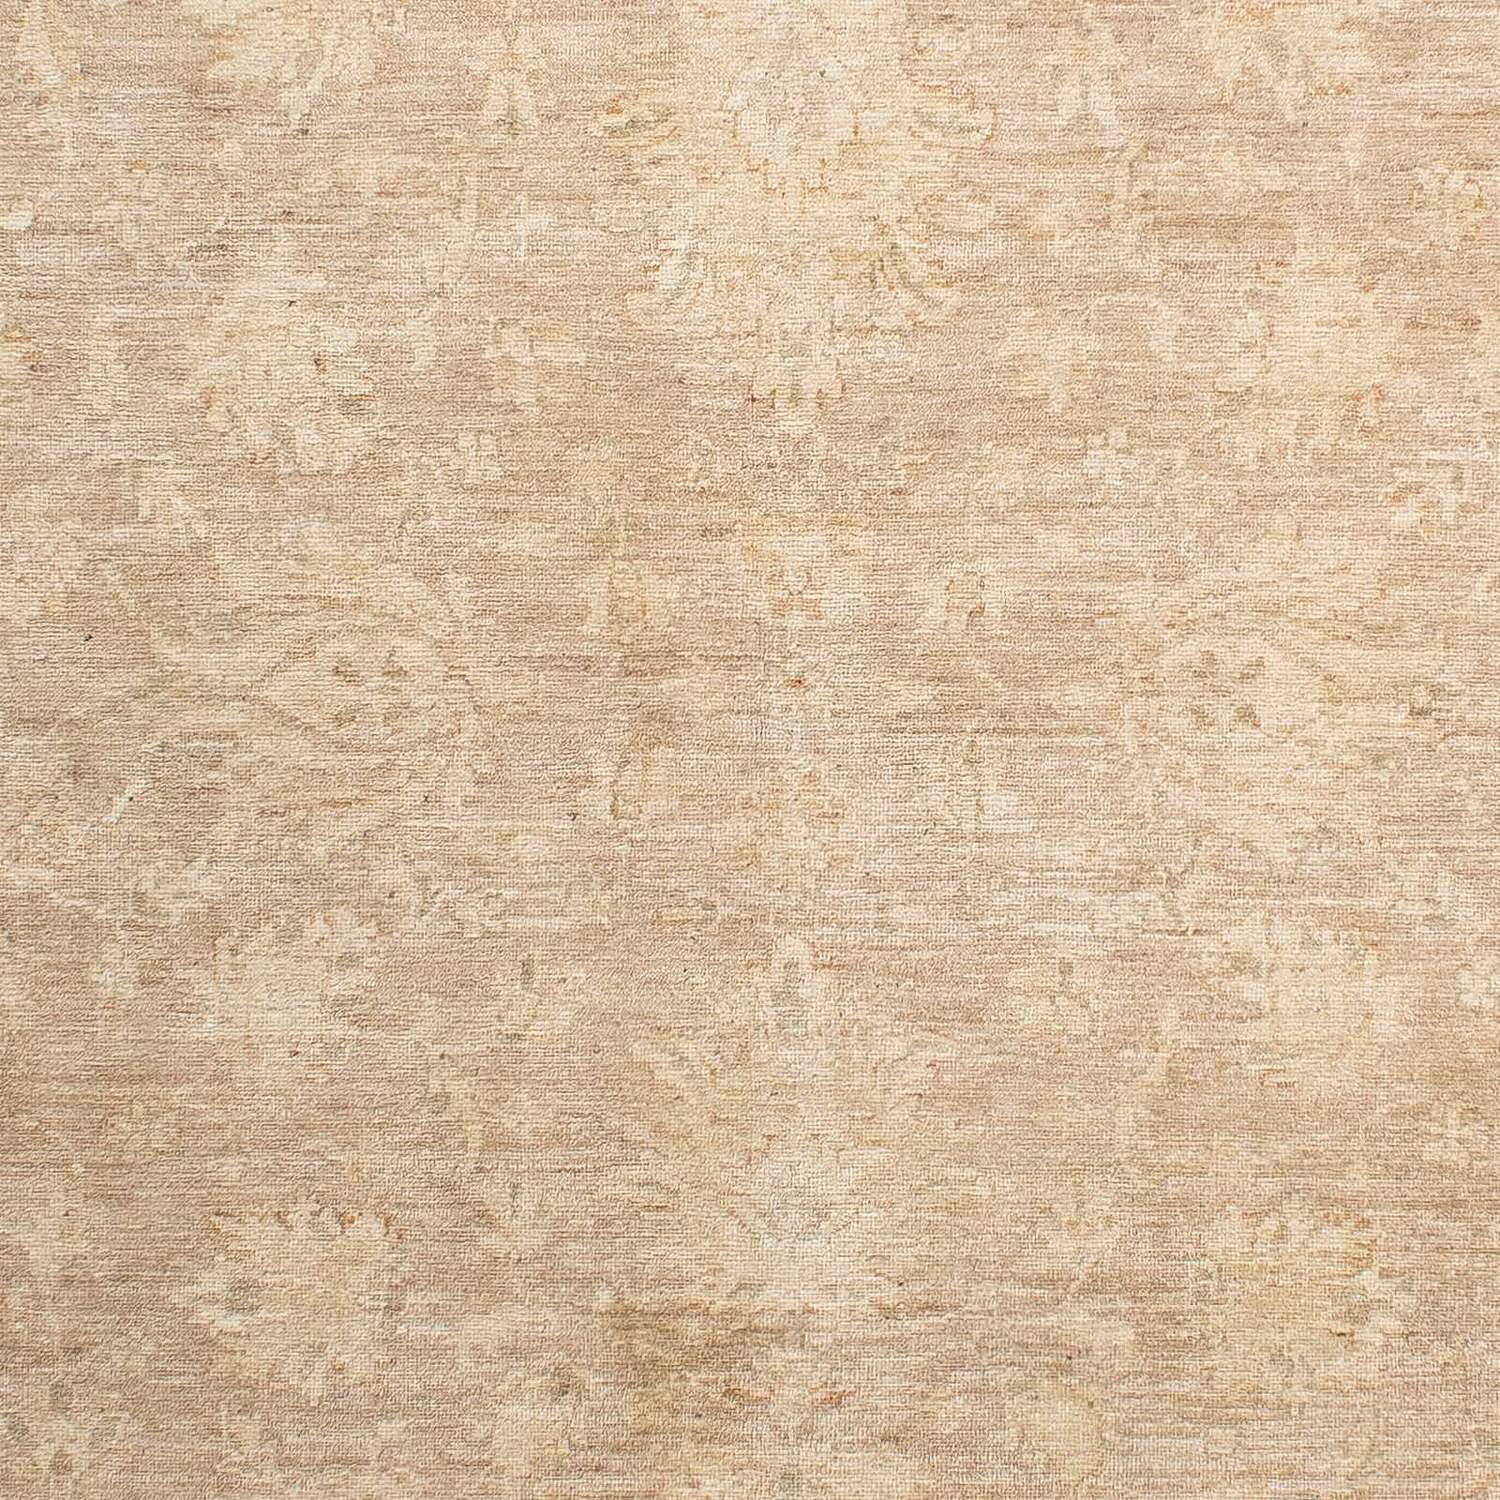 Ziegler Carpet - 232 x 167 cm - beige